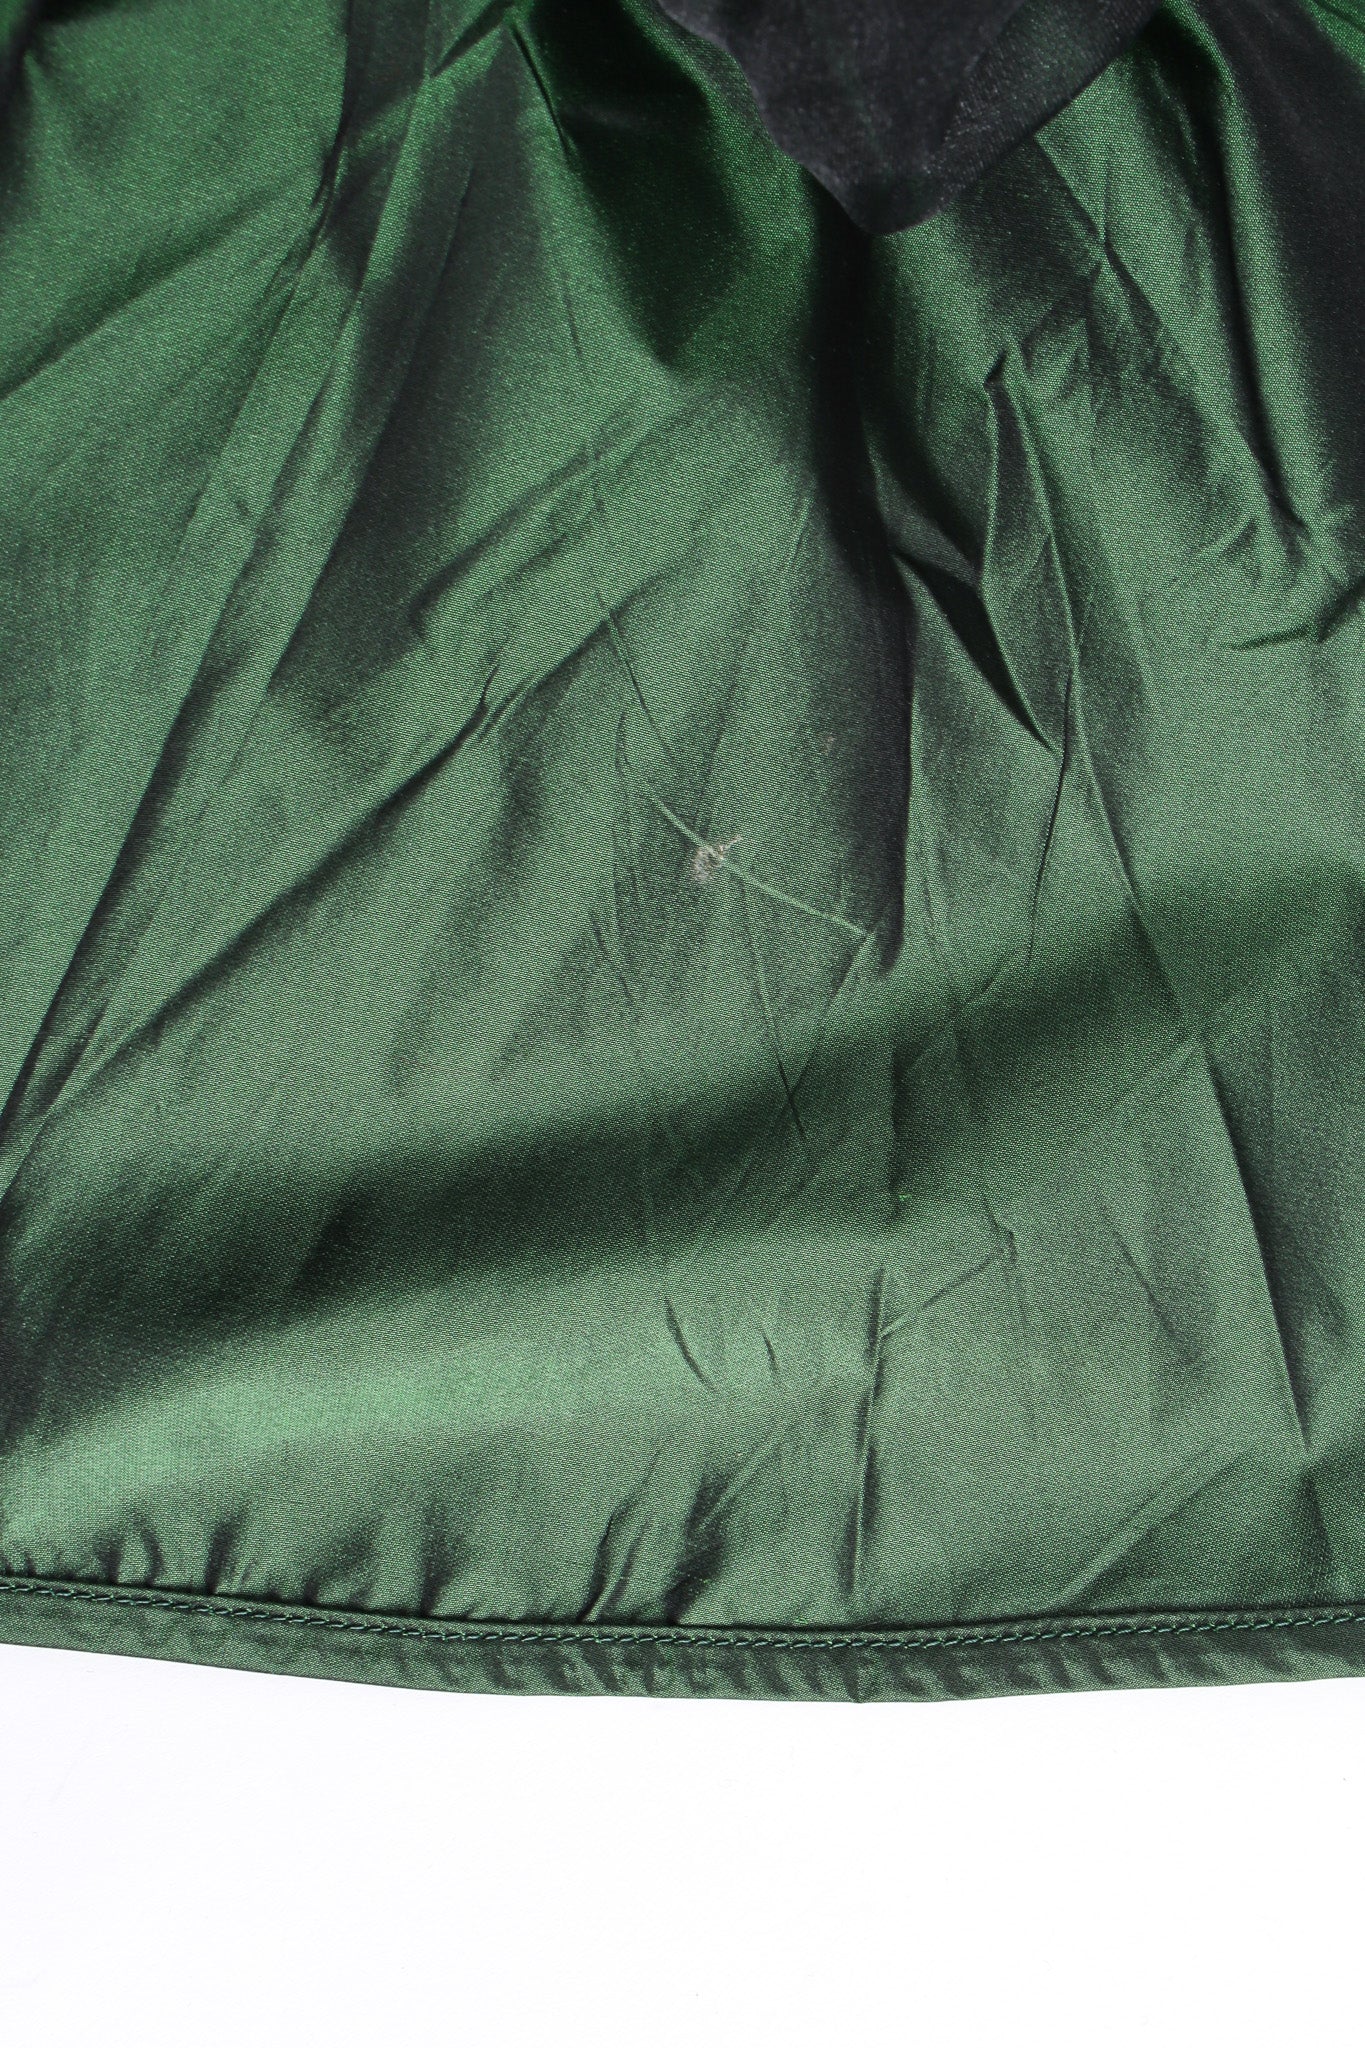 Vintage Emanuel Ungaro Ribbed Knit Taffeta Ruffle Dress lining stain @ Recess LA